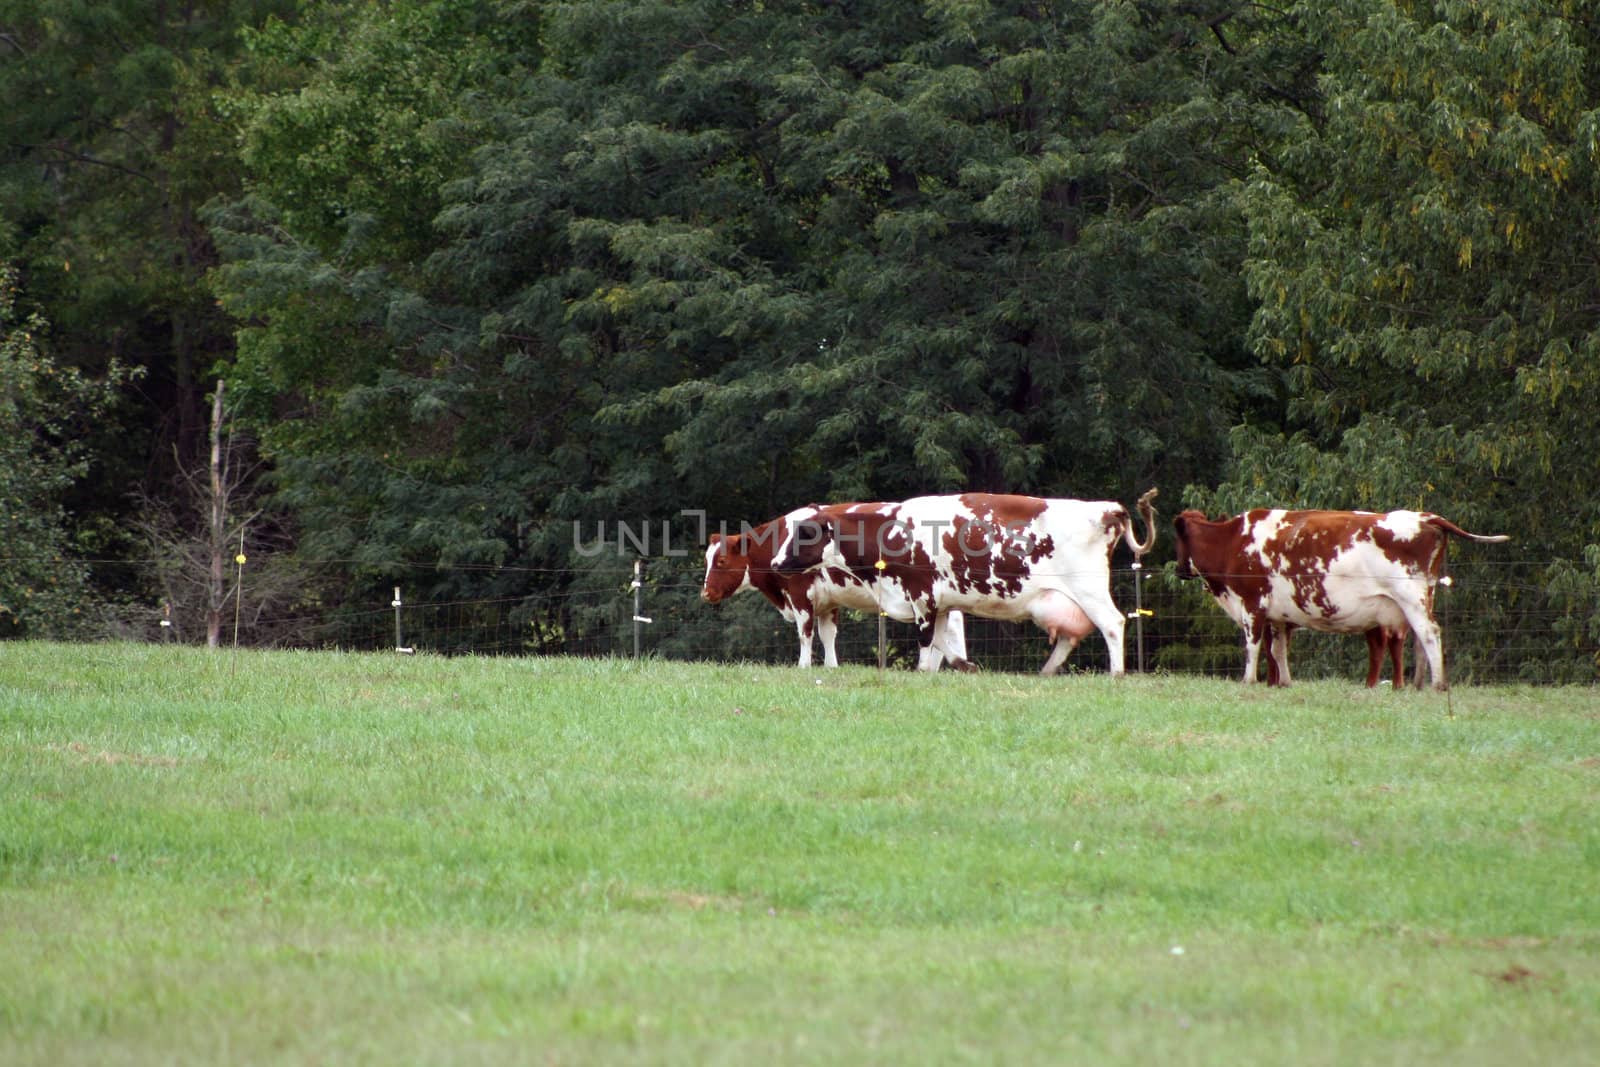 Cows in a field by njnightsky